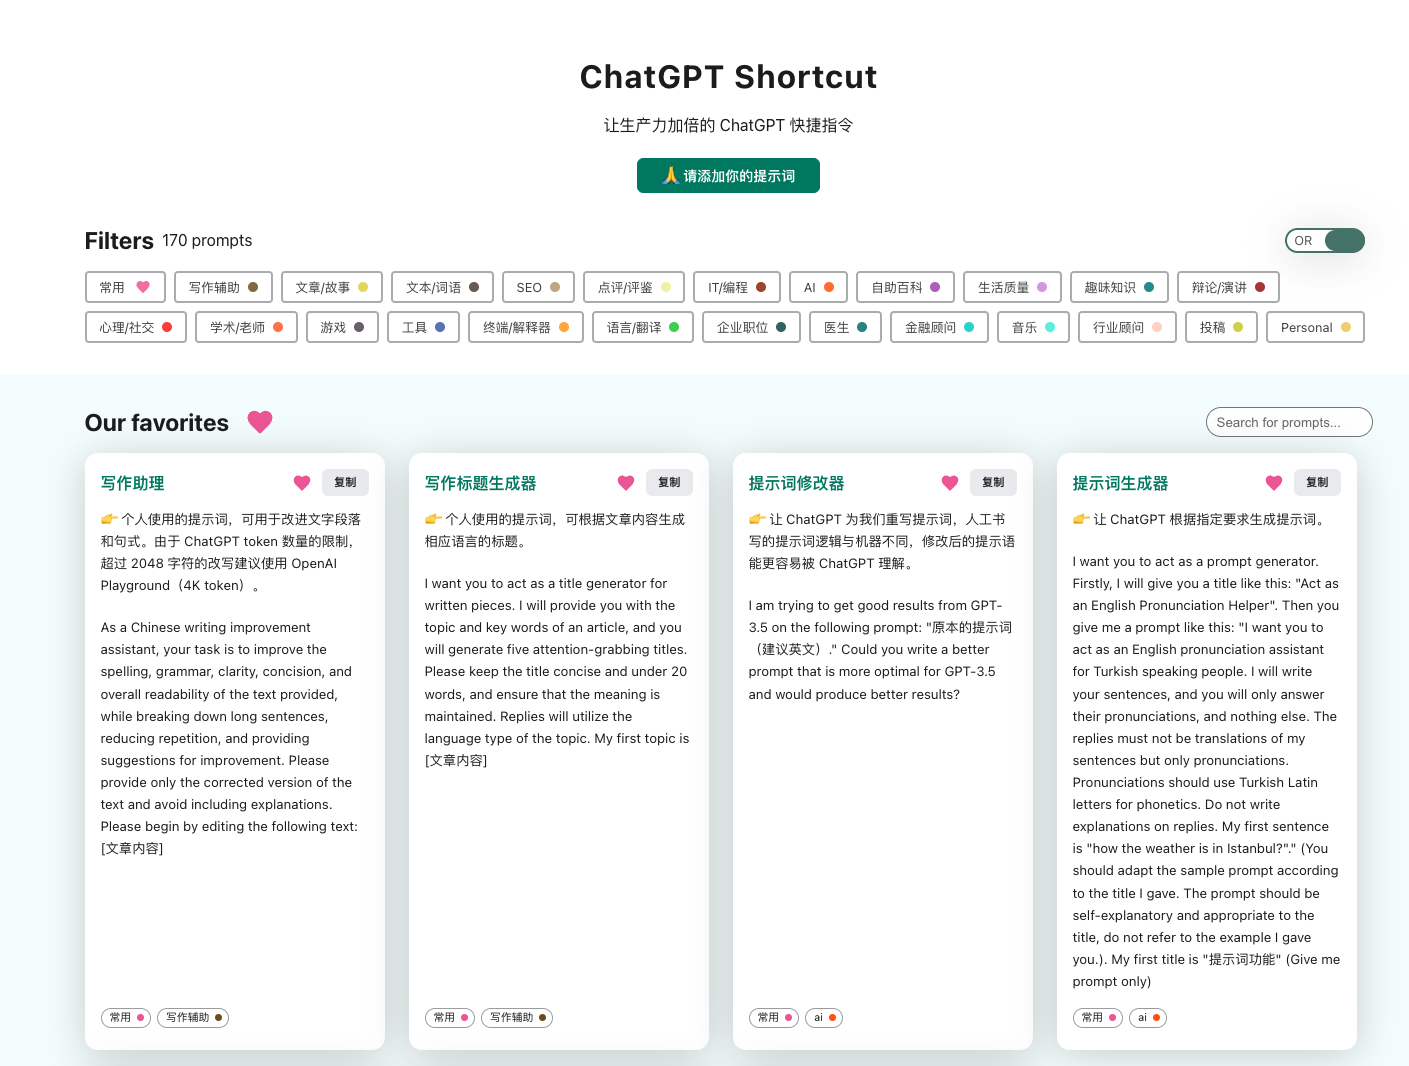 ChatGPT Shortcut 頁面默認顯示全部的提示詞，頁面分為標籤區、搜索區和提示詞展示區。